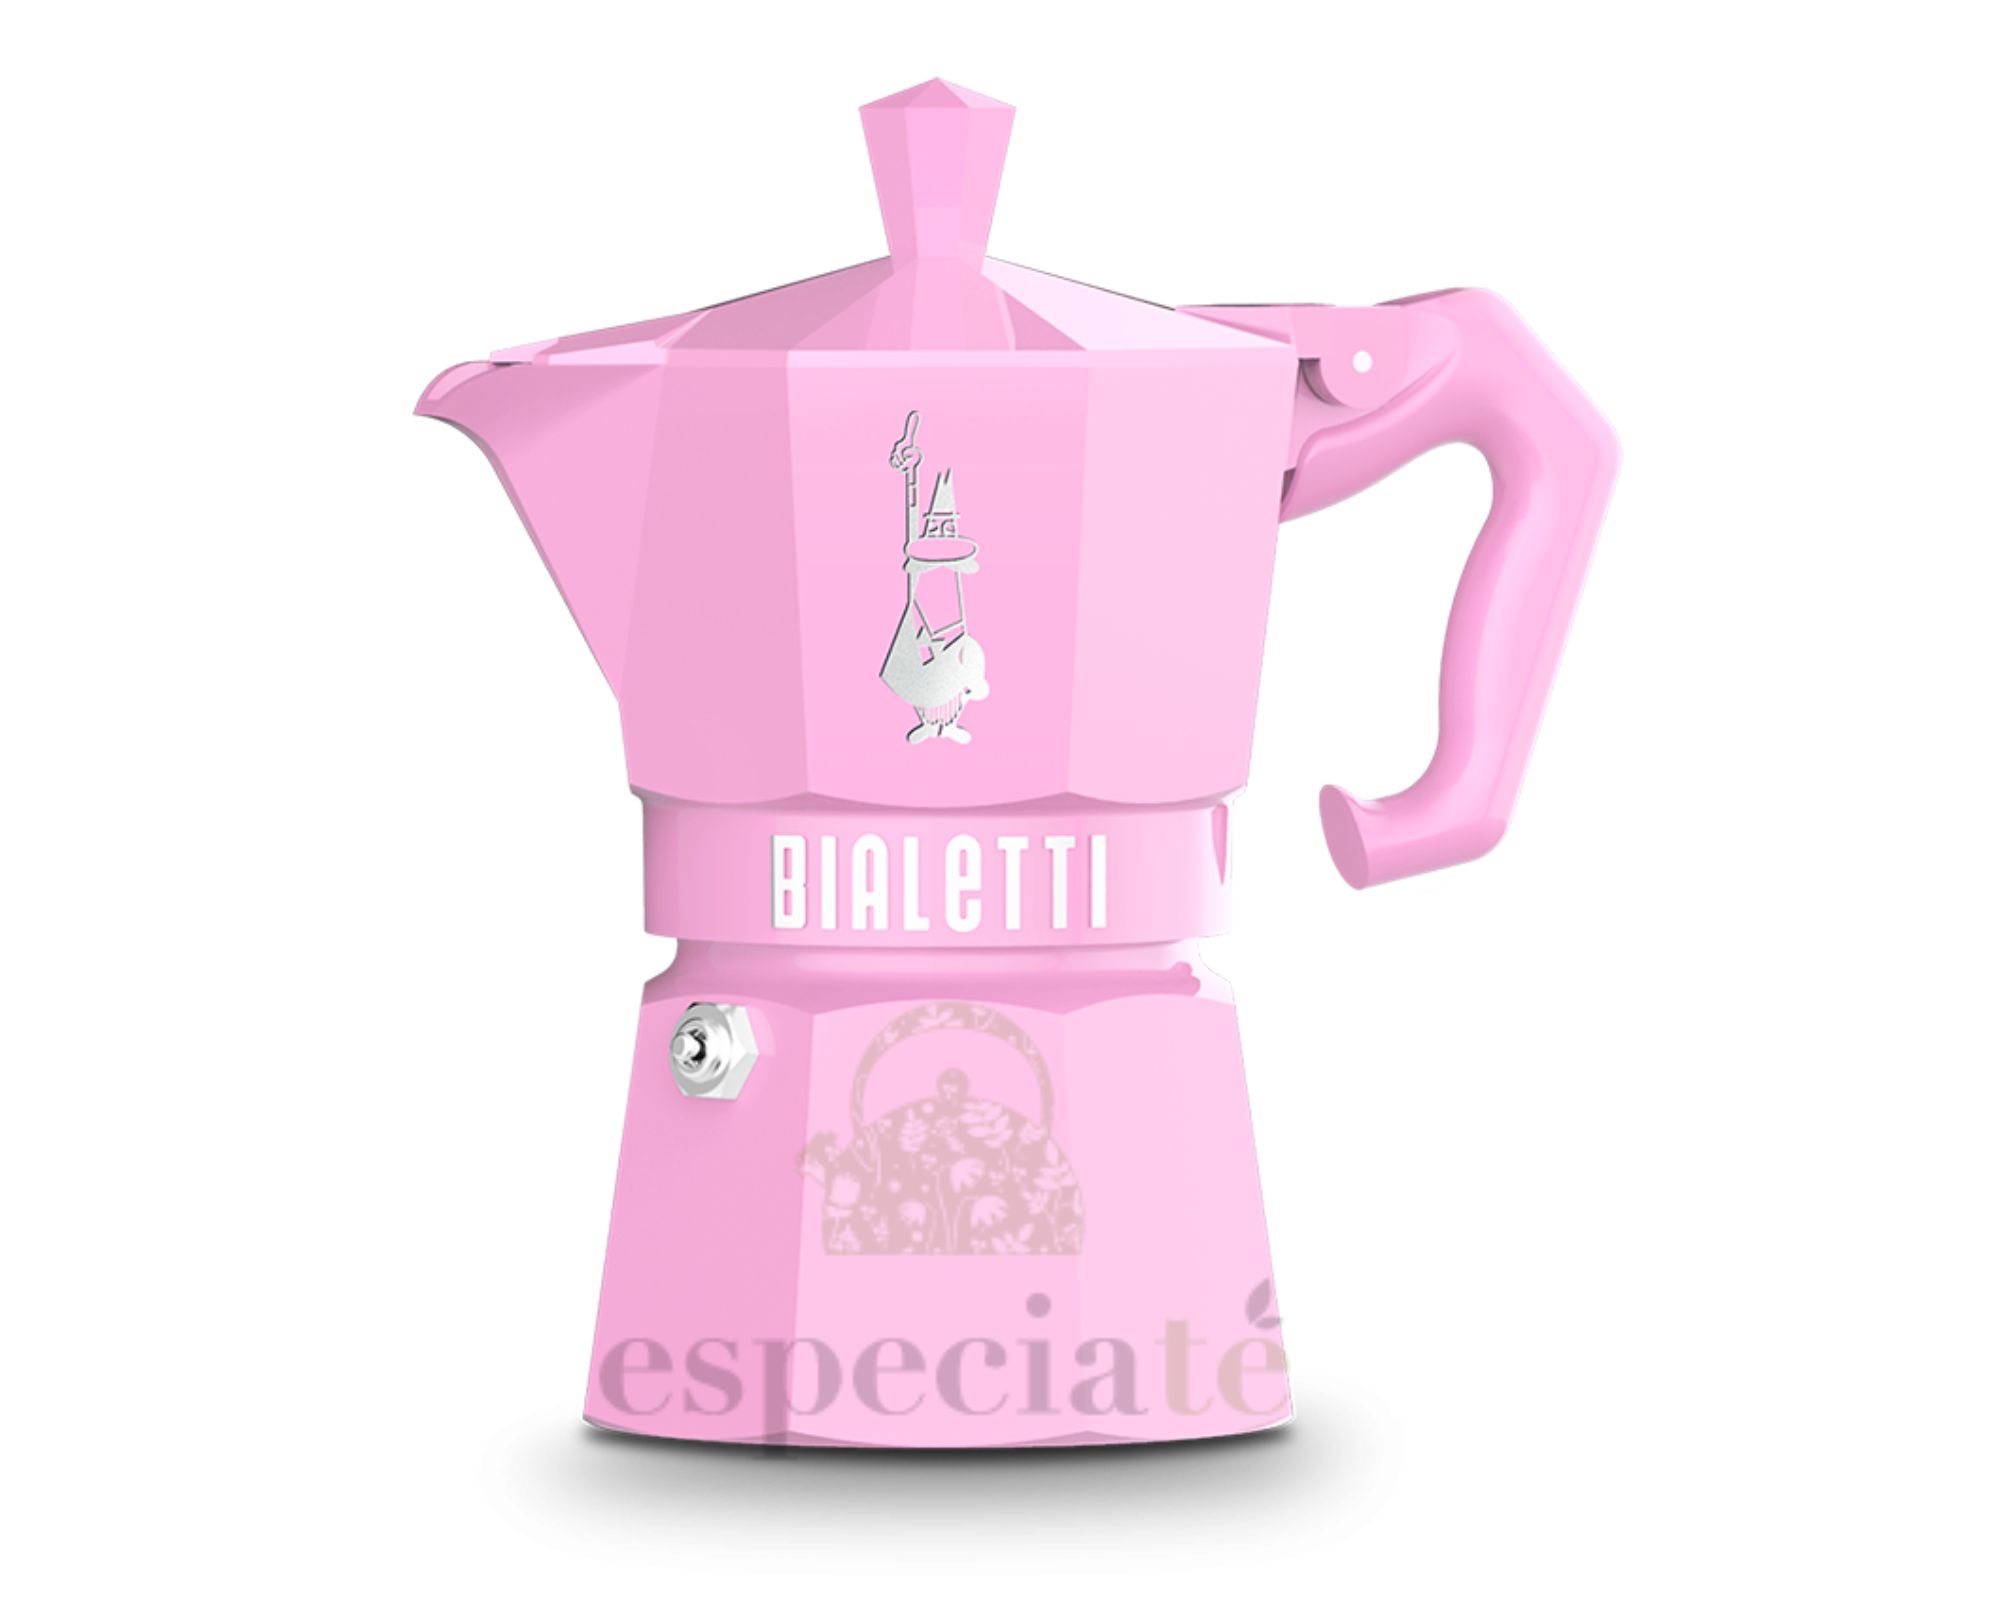 Cafetera Bialetti Pink 6tz - Especiate